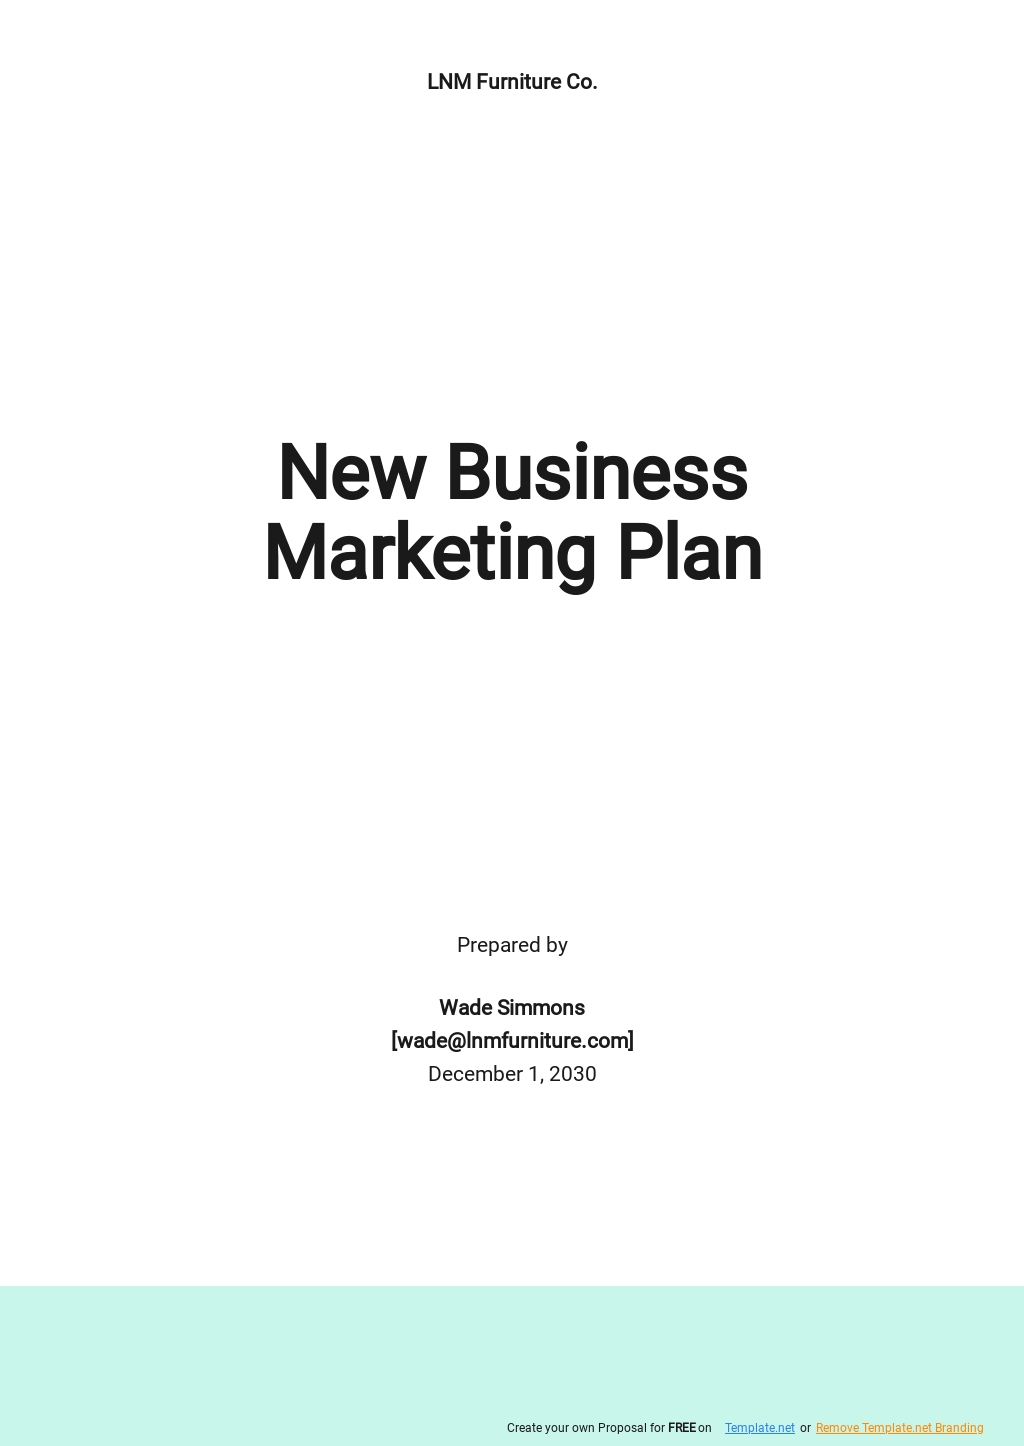 New Business Marketing Plan Template